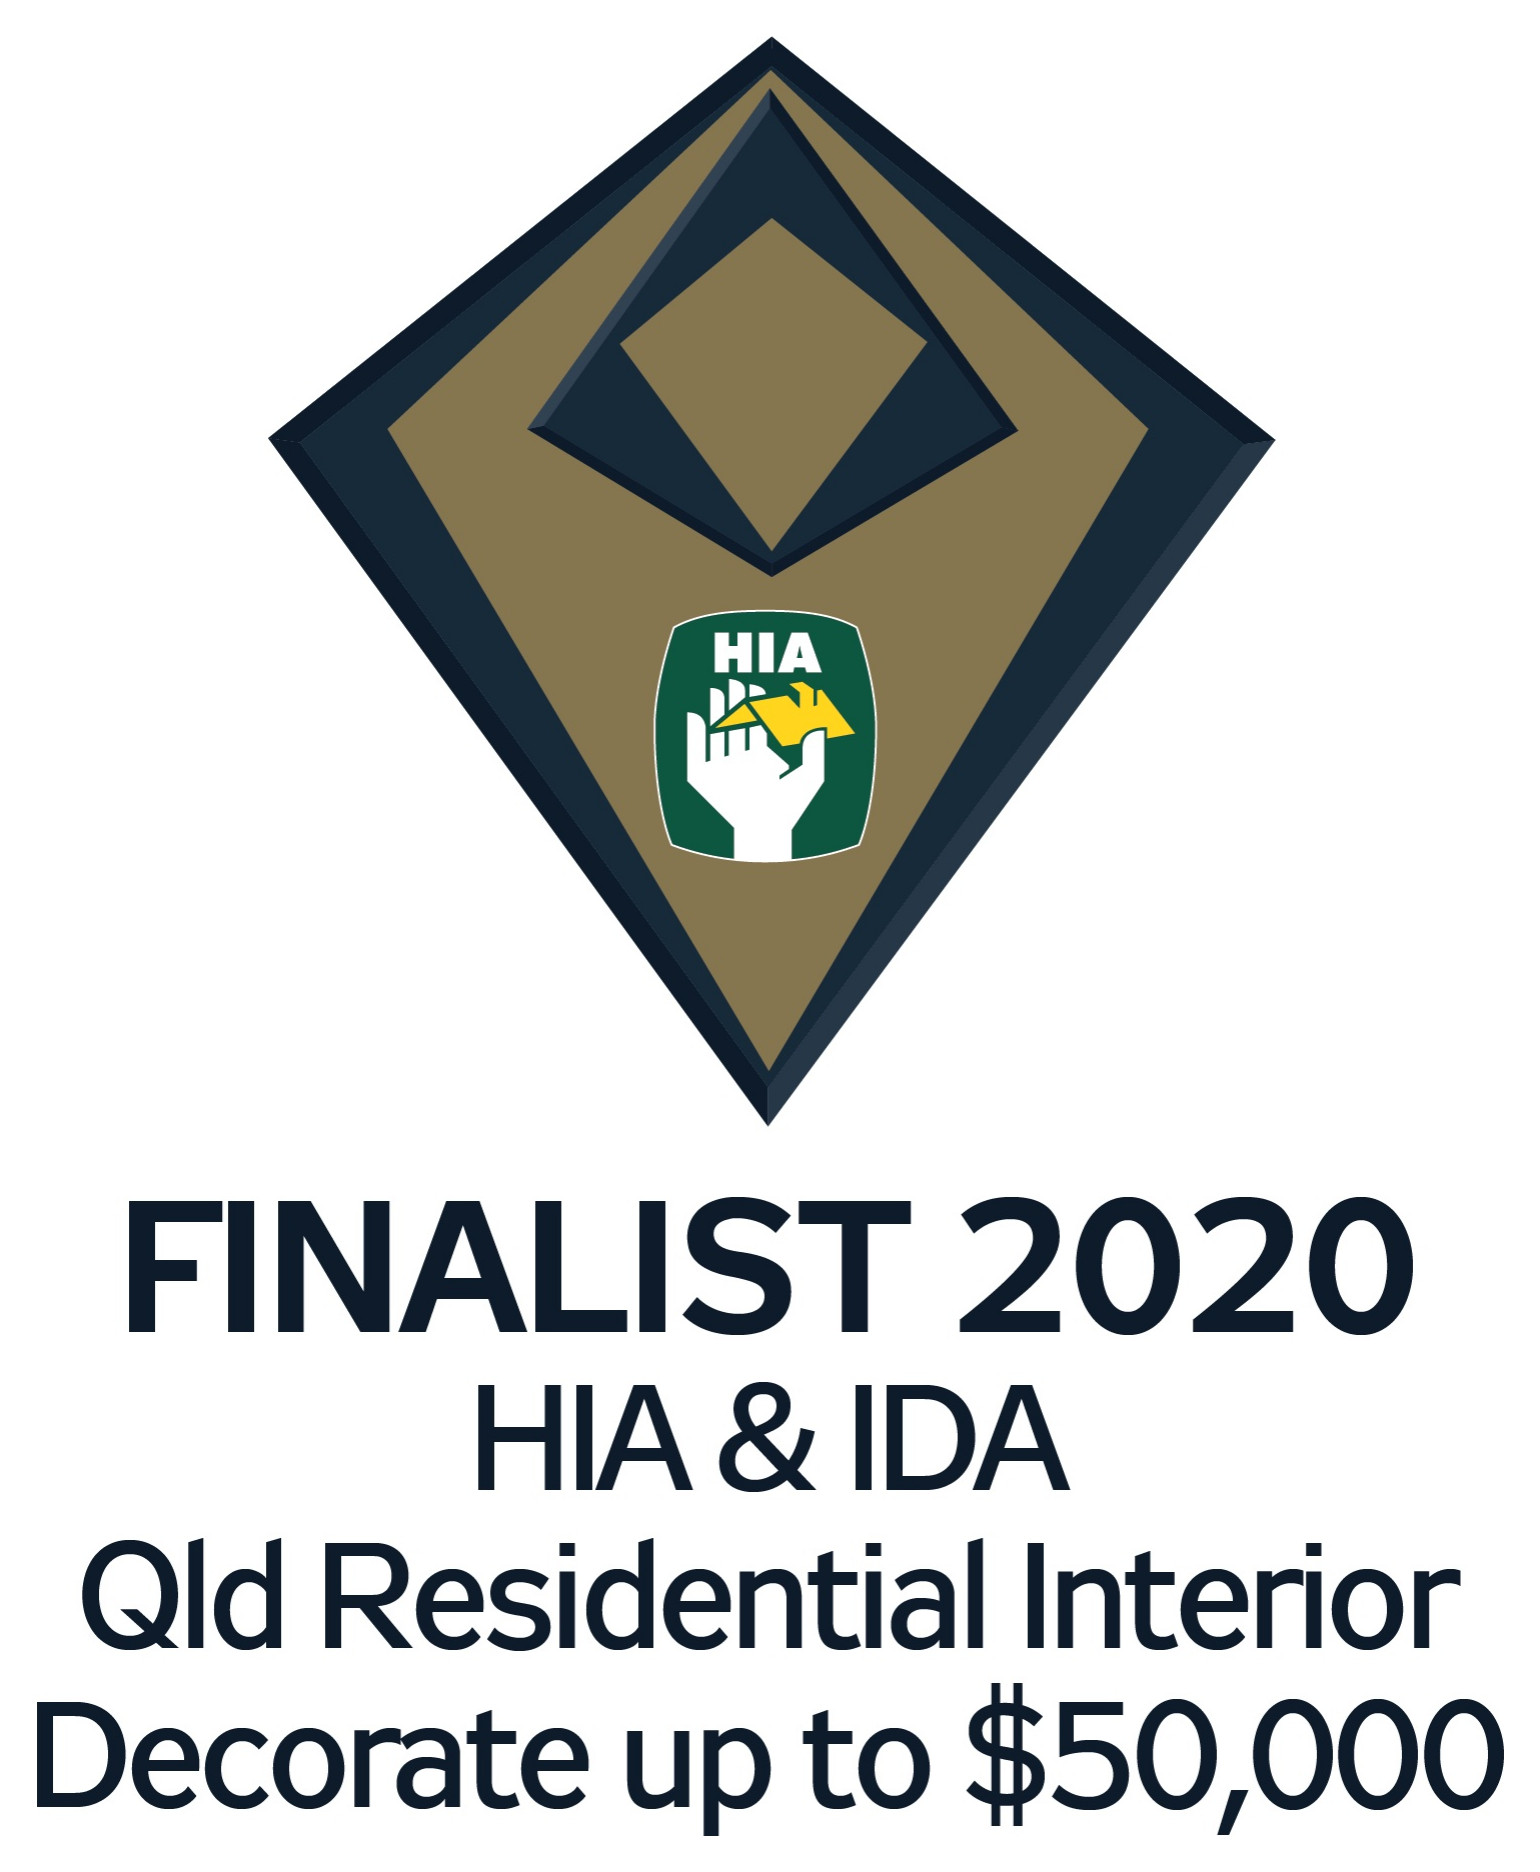 2020 HIA + DIA Qld Residential Interior Decorator up to $50,000 - FINALIST